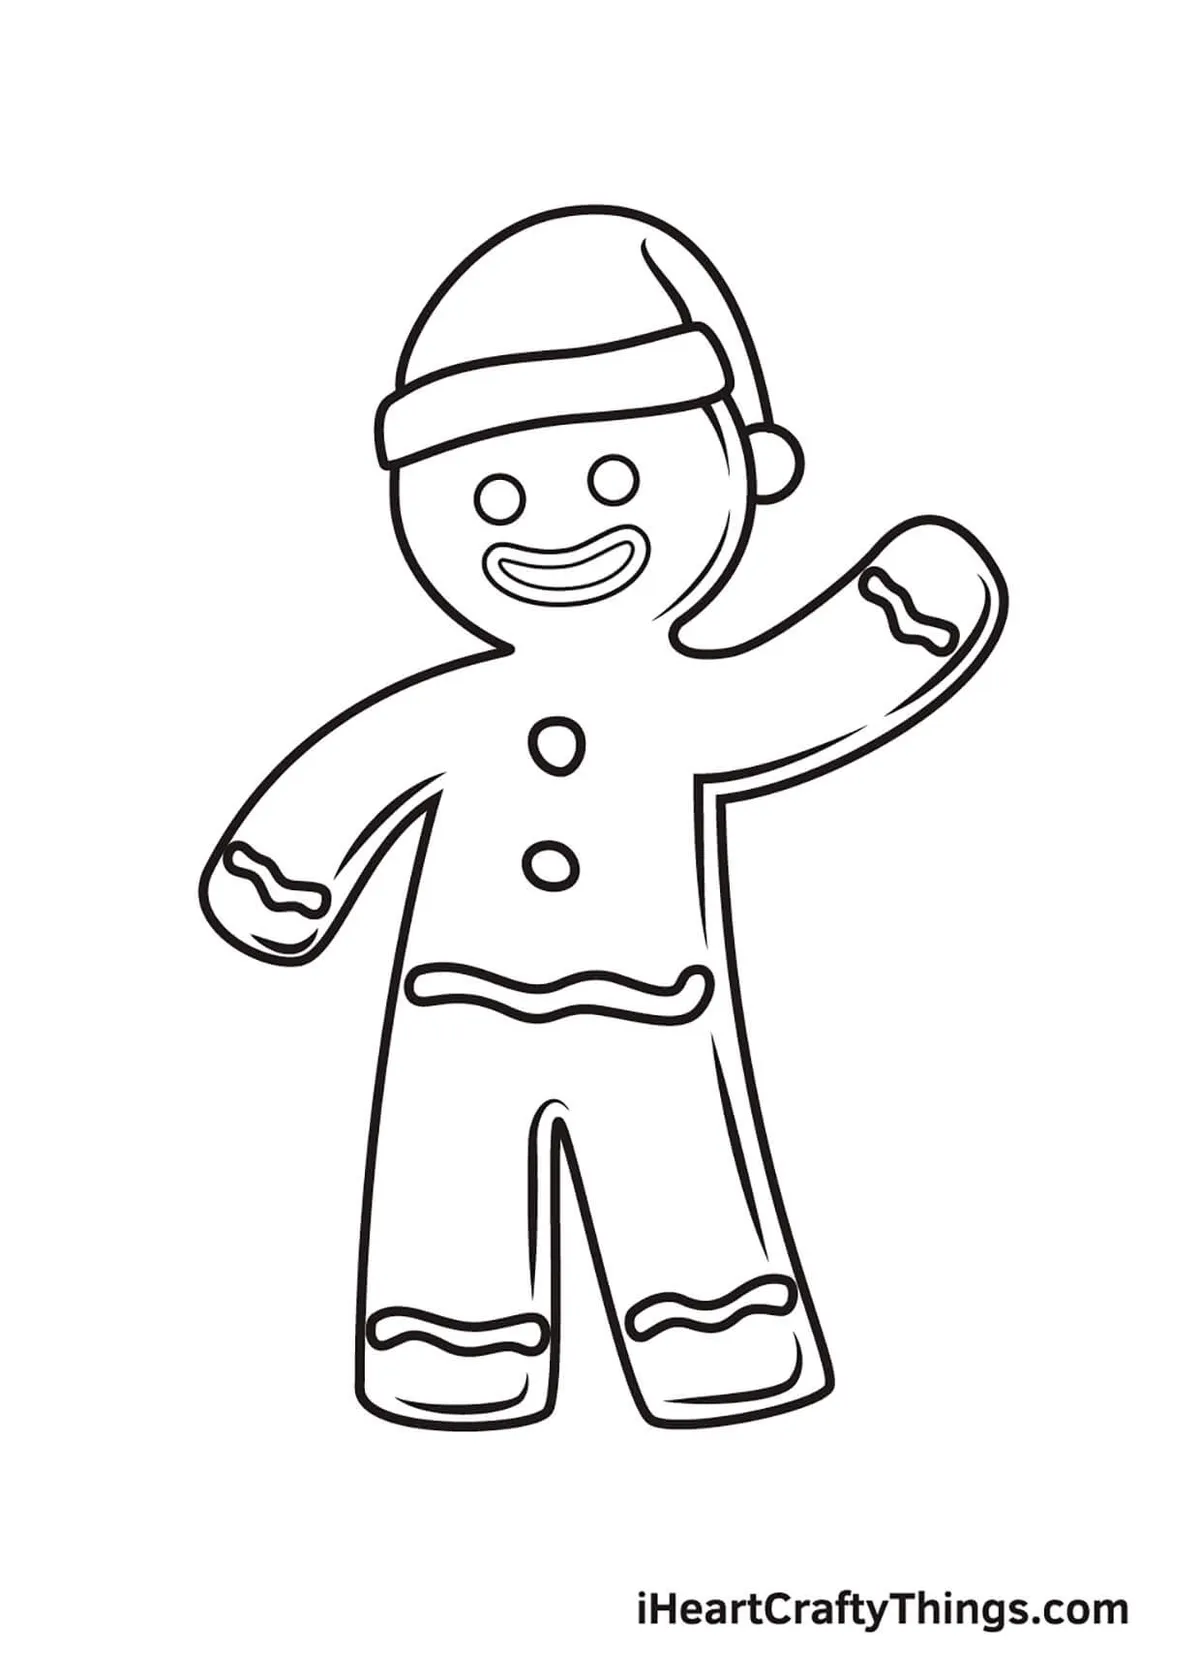 Gingerbread man drawing